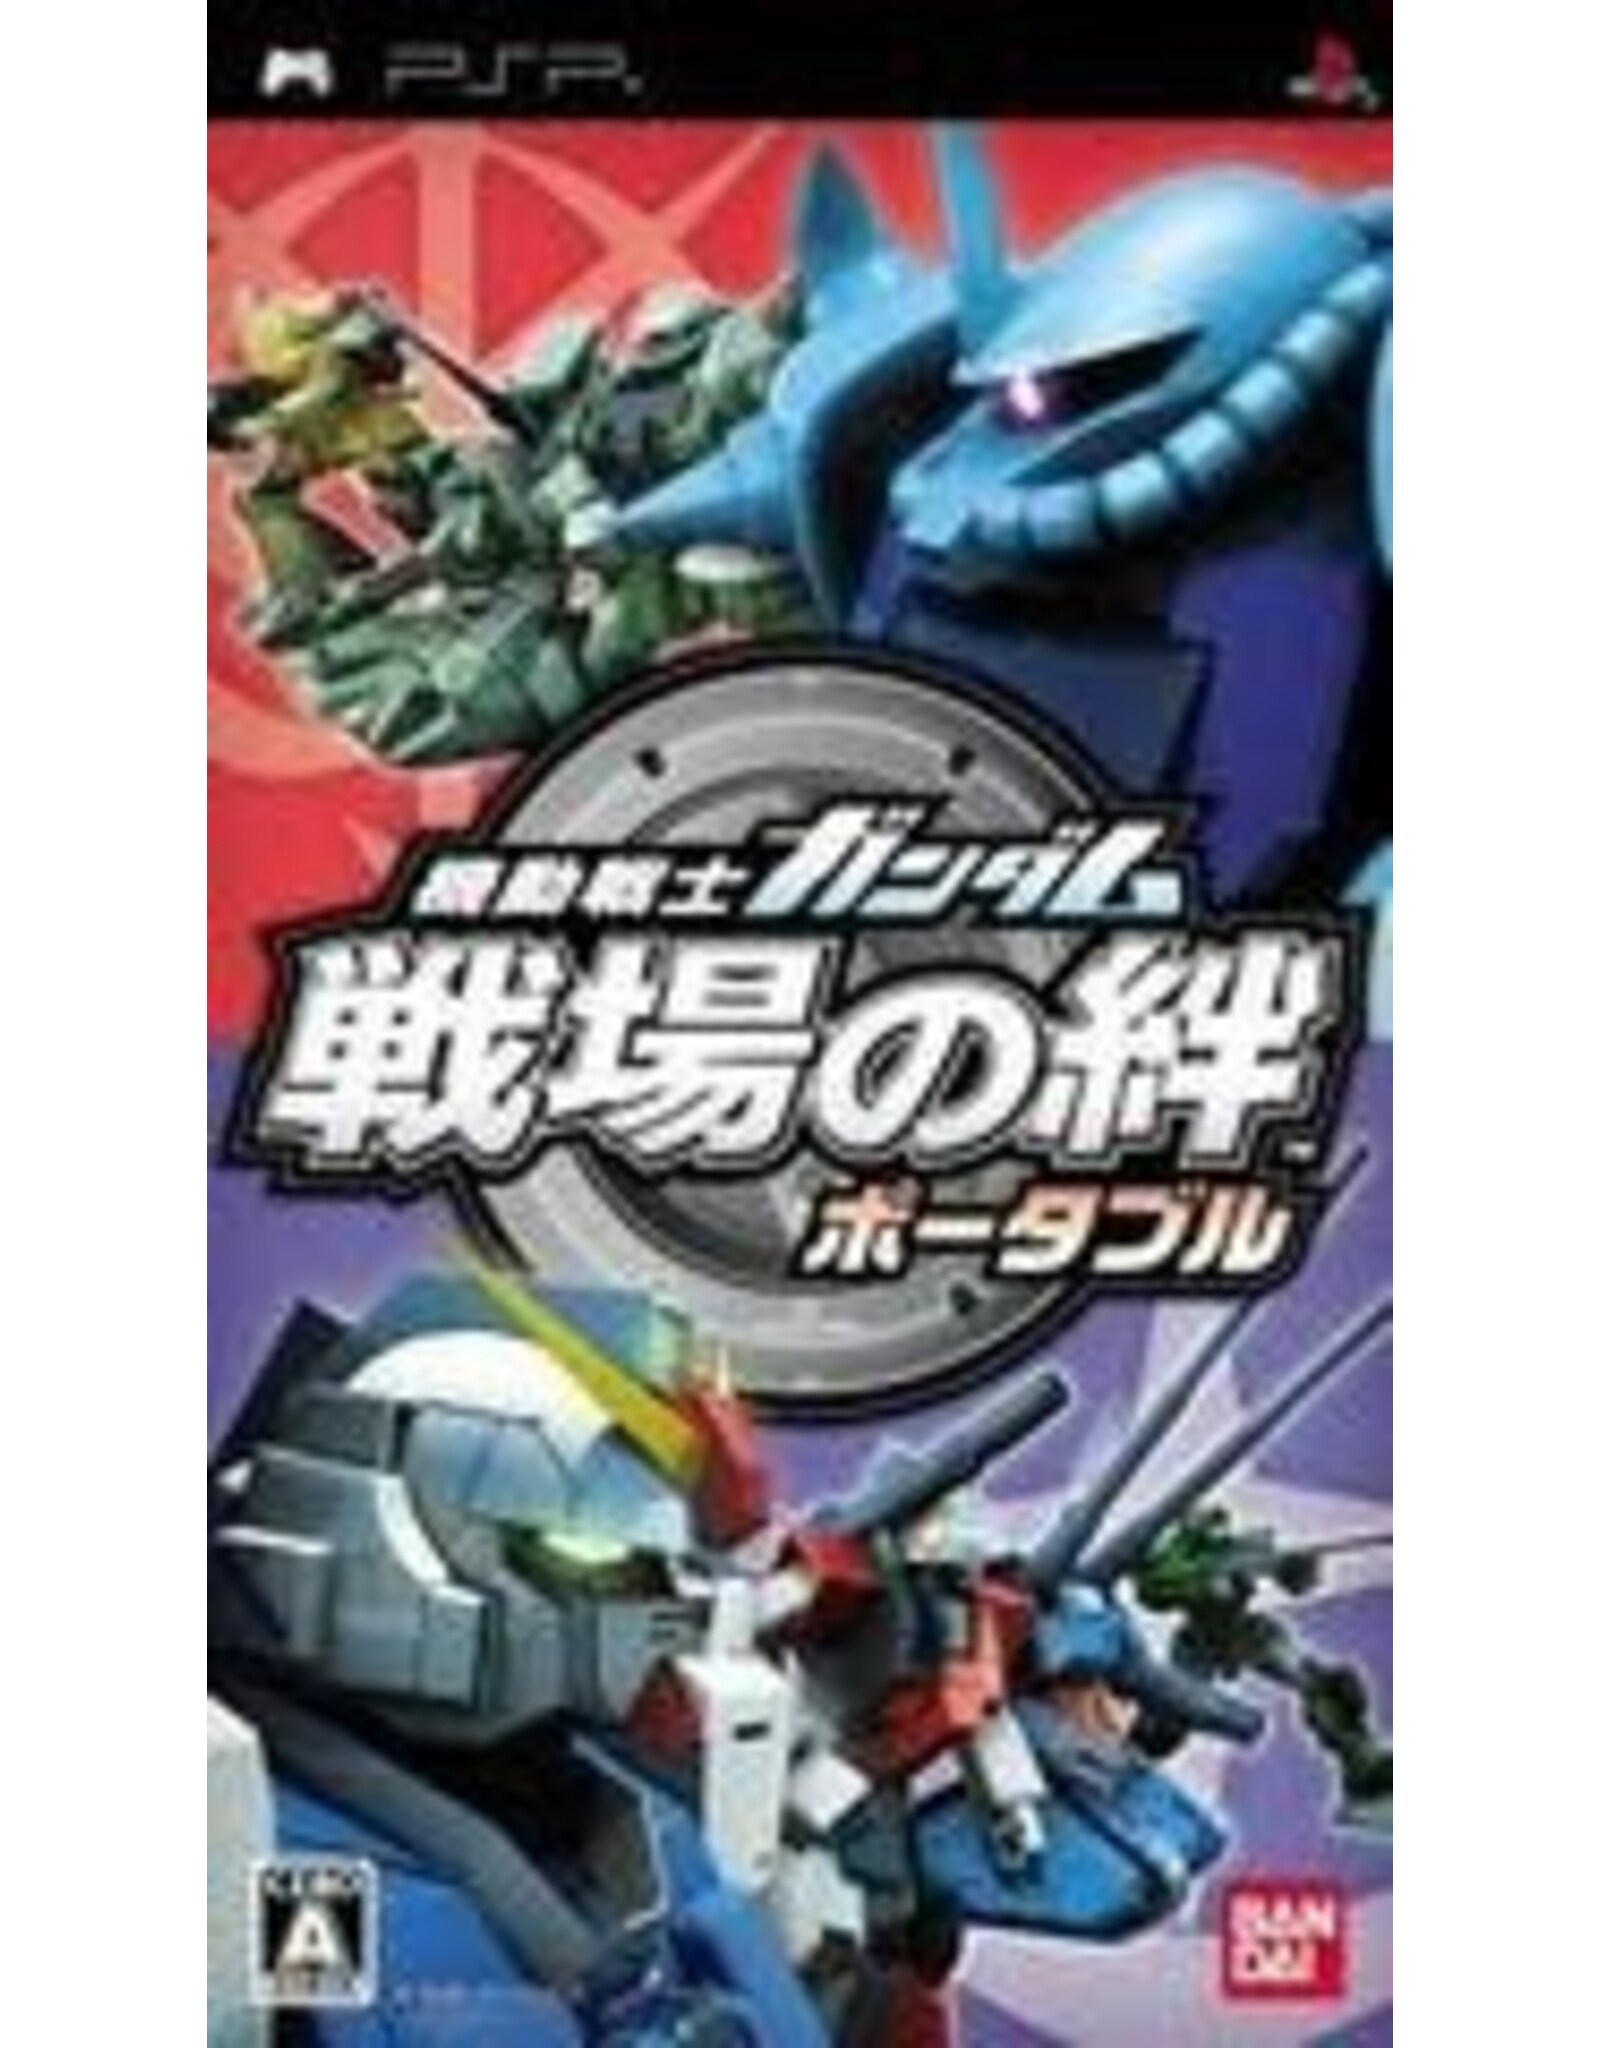 PSP Mobile Suit Gundam Senjou no Kizuna Portable (CiB, JP Import)